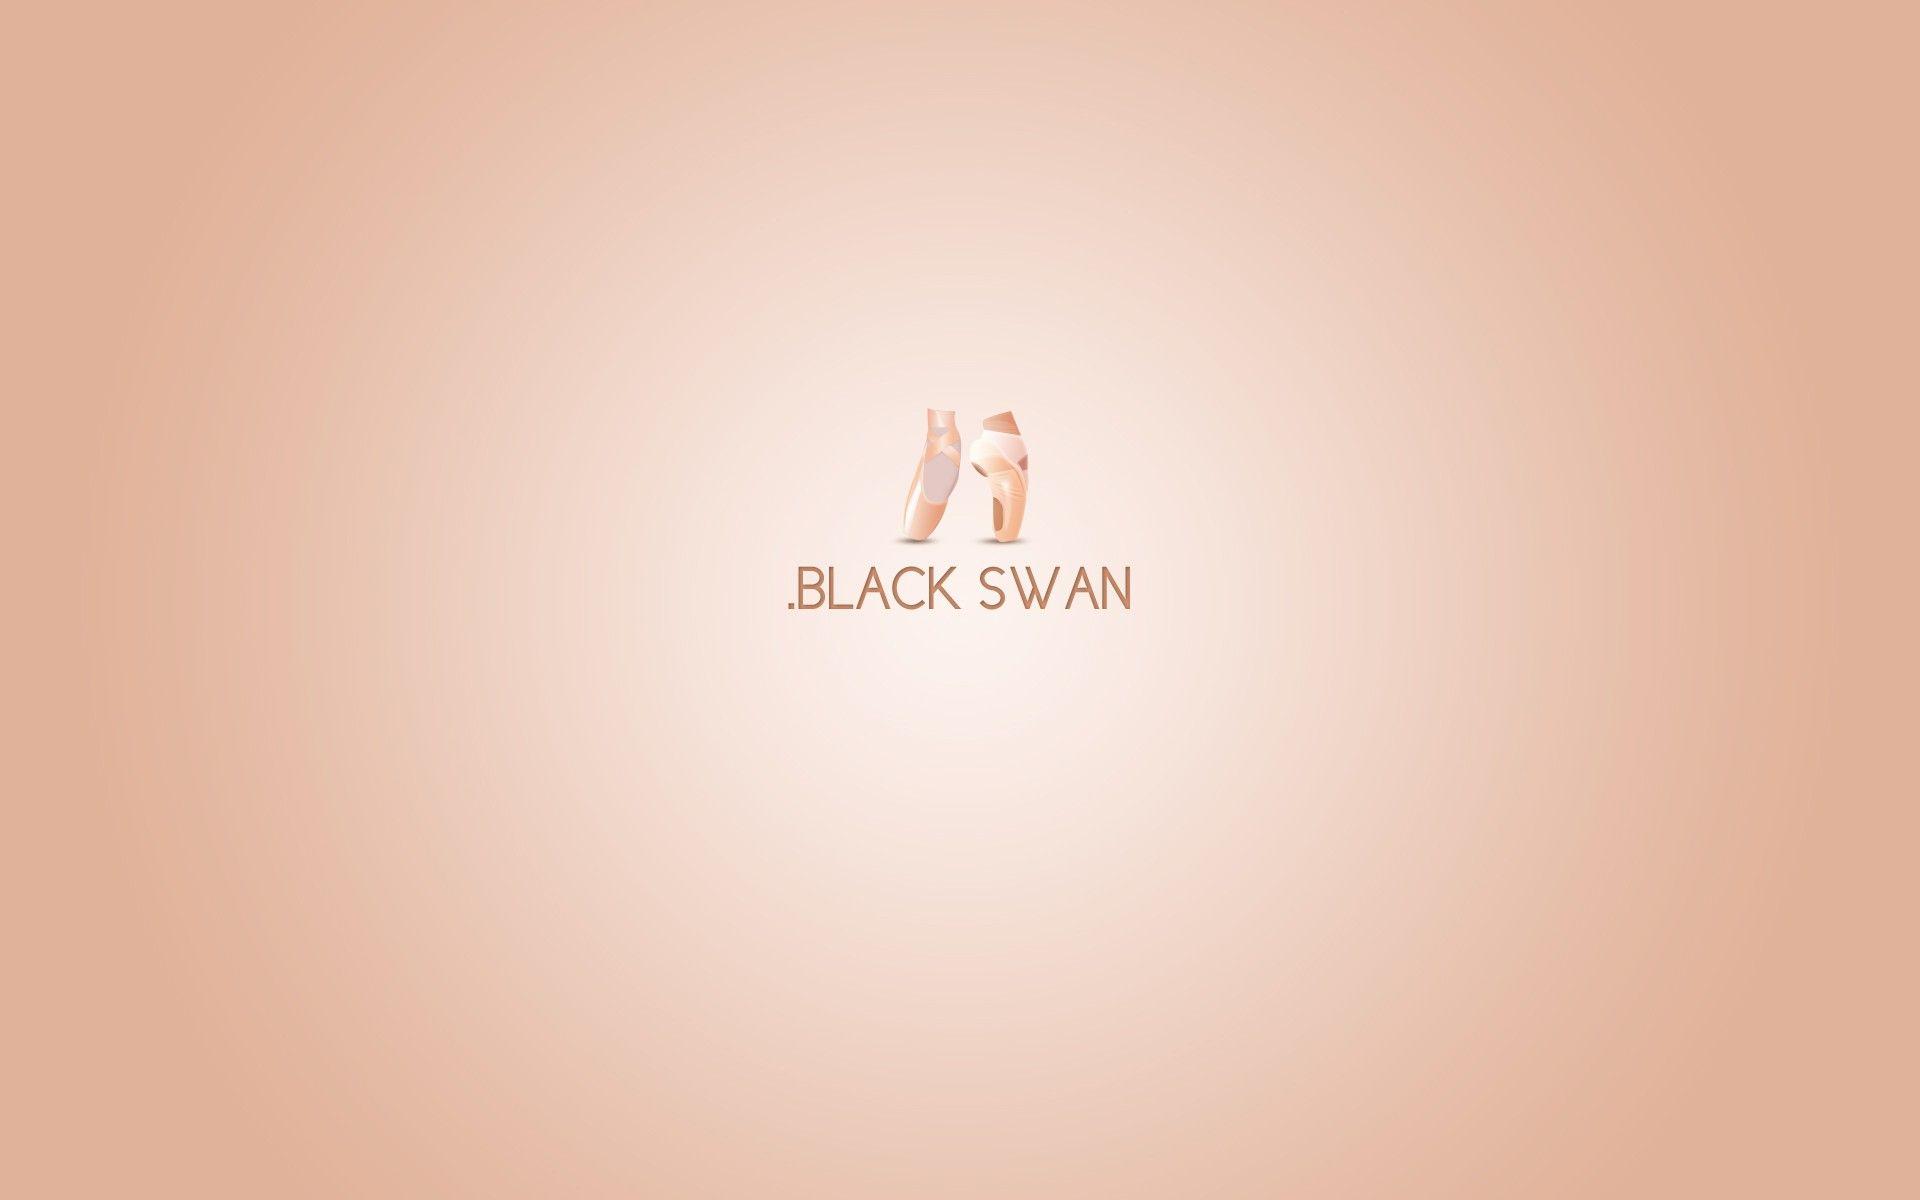 Download the Black Swan Pointe Shoes Wallpaper, Black Swan Pointe